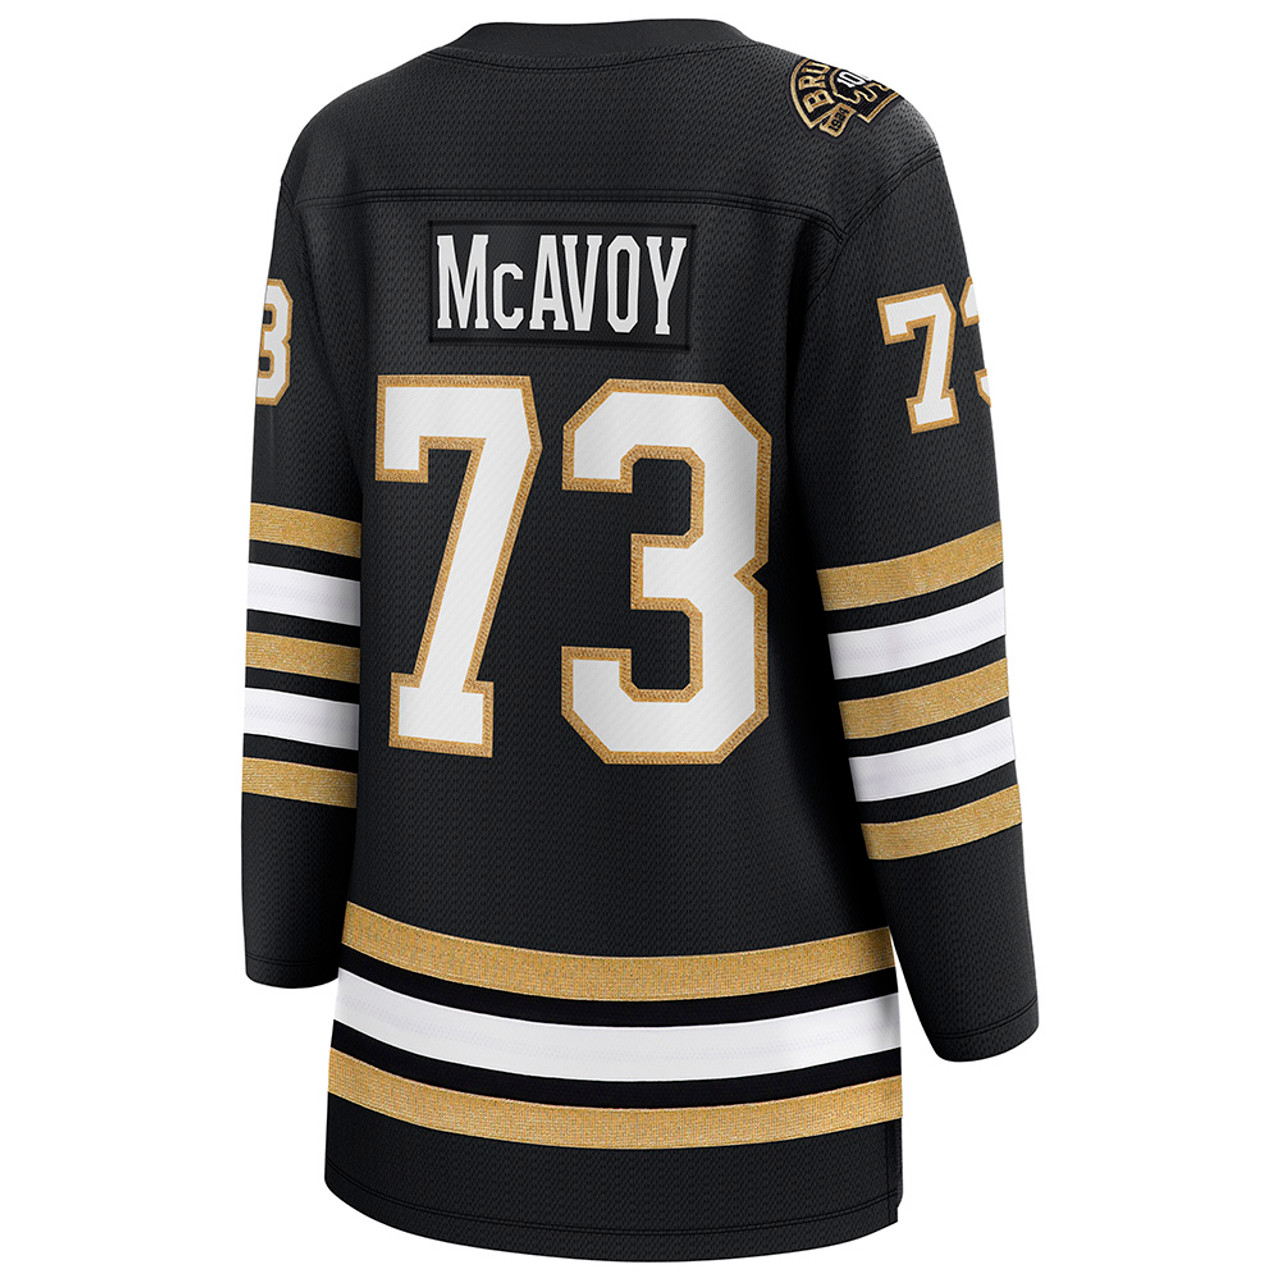 Charlie McAvoy Boston Bruins Jerseys, Charlie McAvoy Bruins T-Shirts, Gear